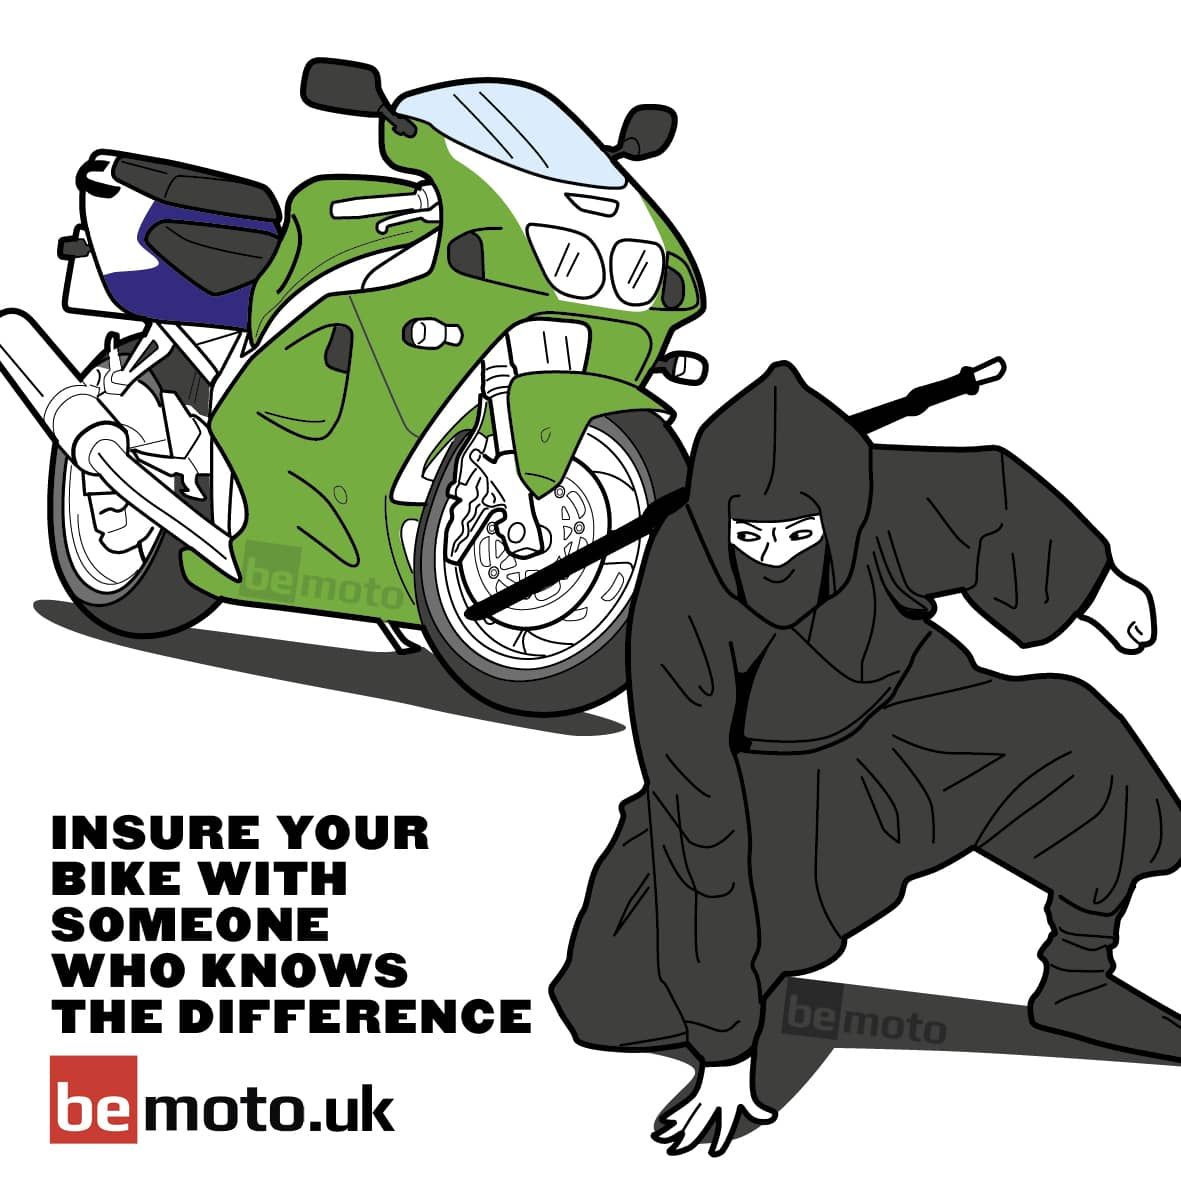 Moto Moto  Know Your Meme